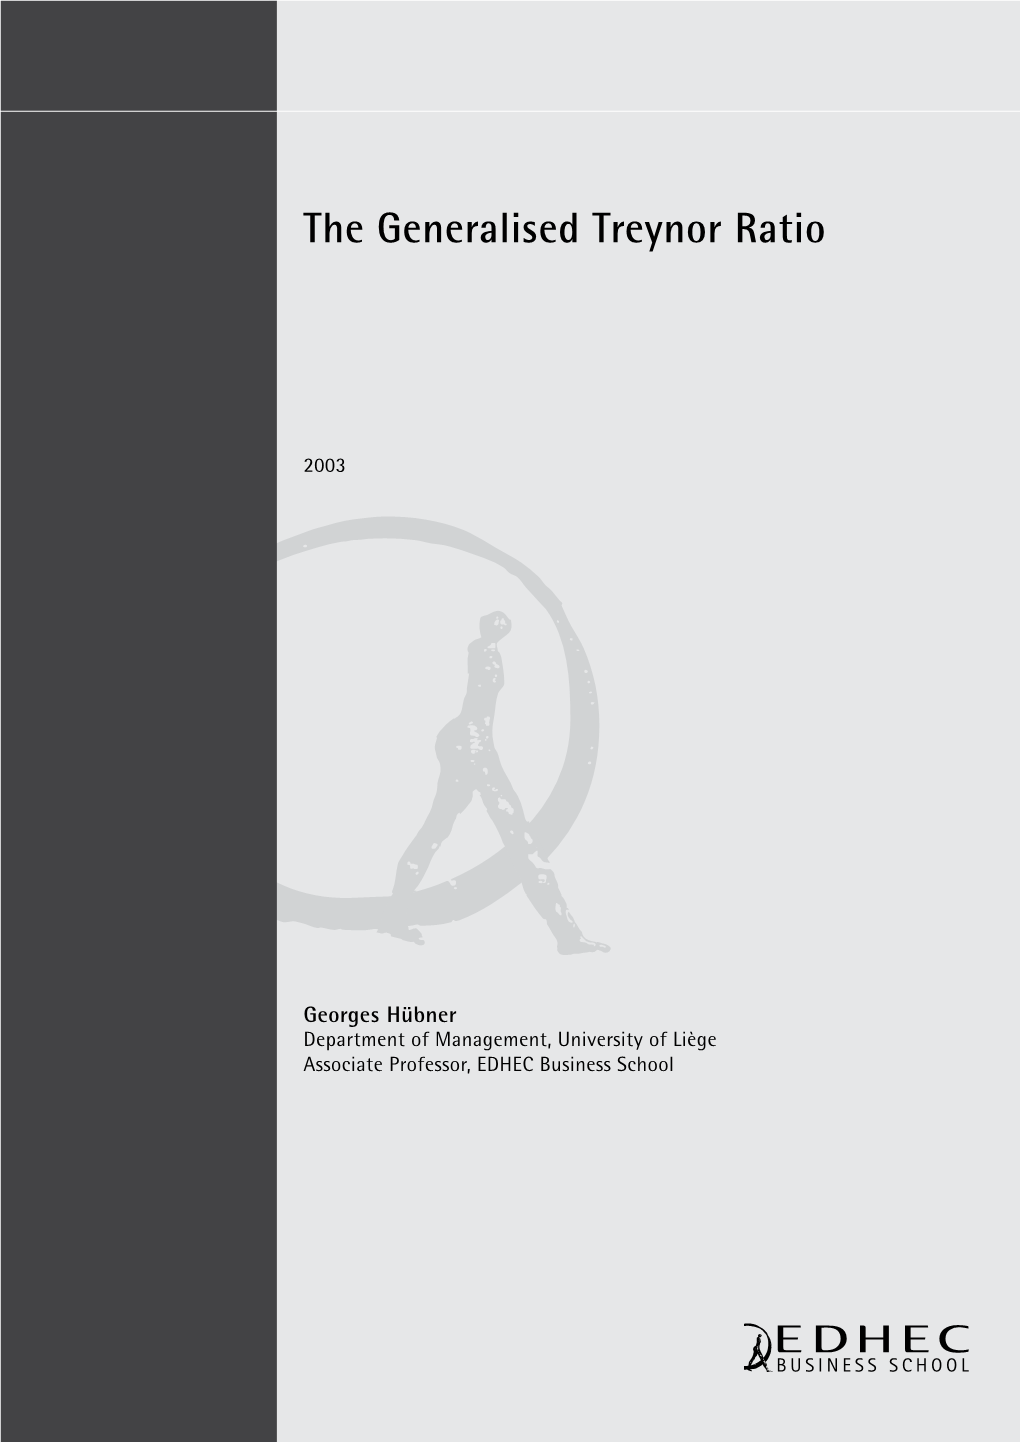 The Generalised Treynor Ratio